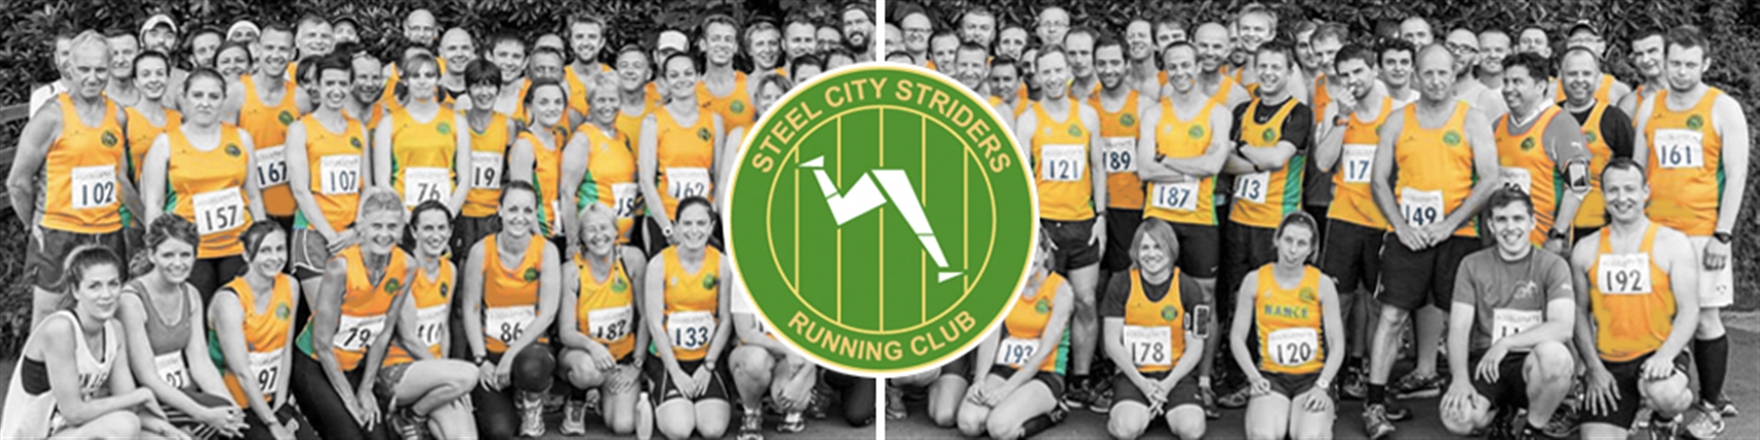 Midnight Sun Marathon Race ReportSteel City Striders Running Club Sheffield